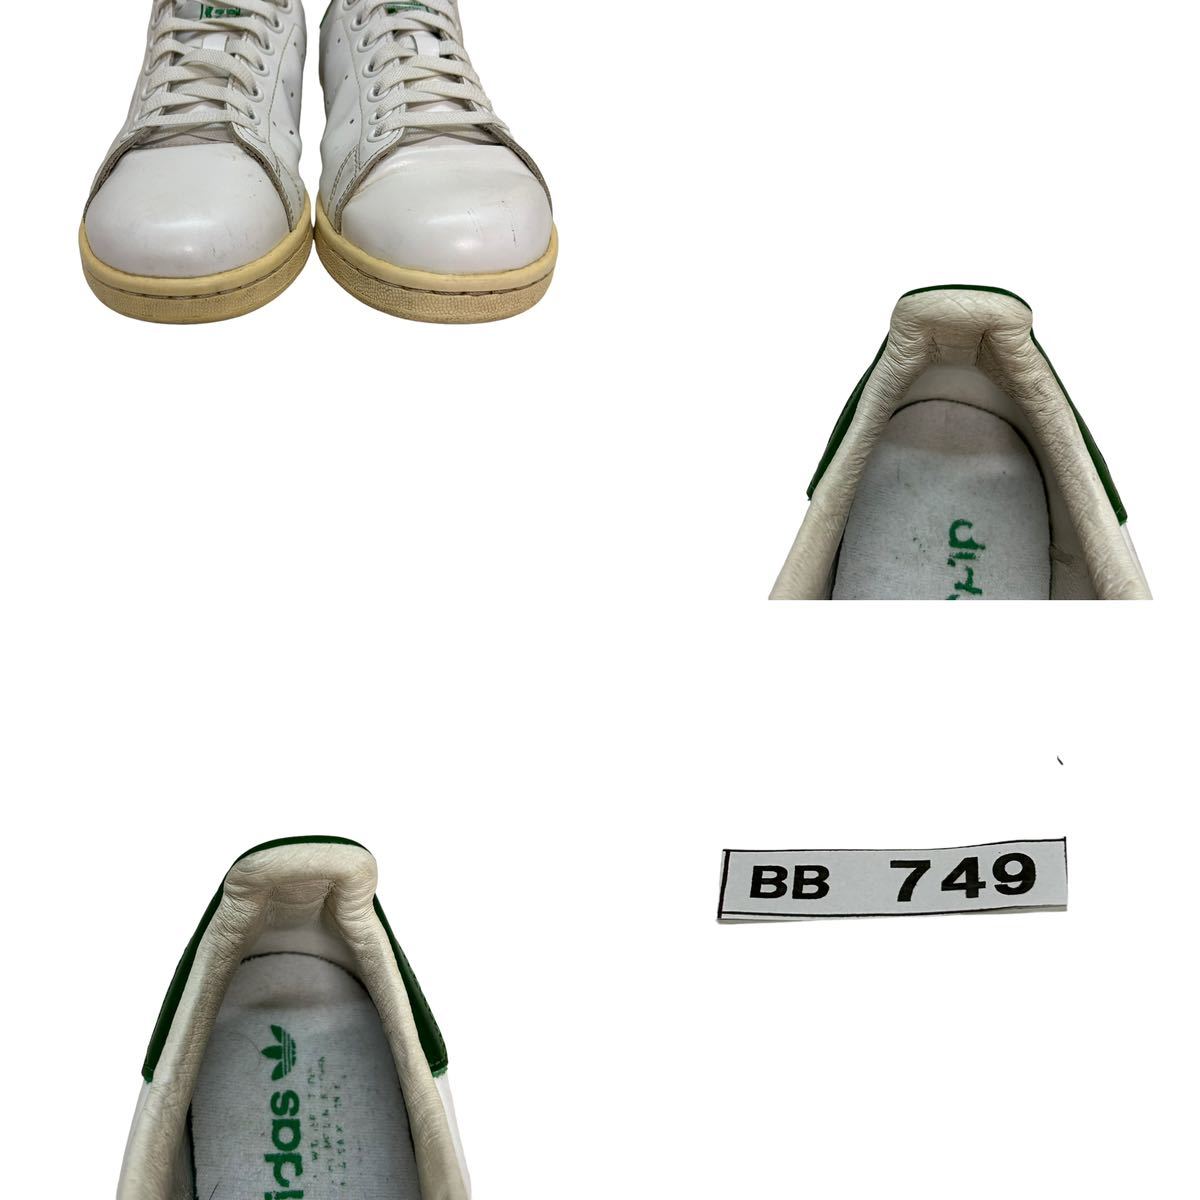 BB749 adidas アディダス STAN SMITH スタンスミス メンズ ローカット スニーカー US6.5 24.5cm ホワイト グリーン_画像10